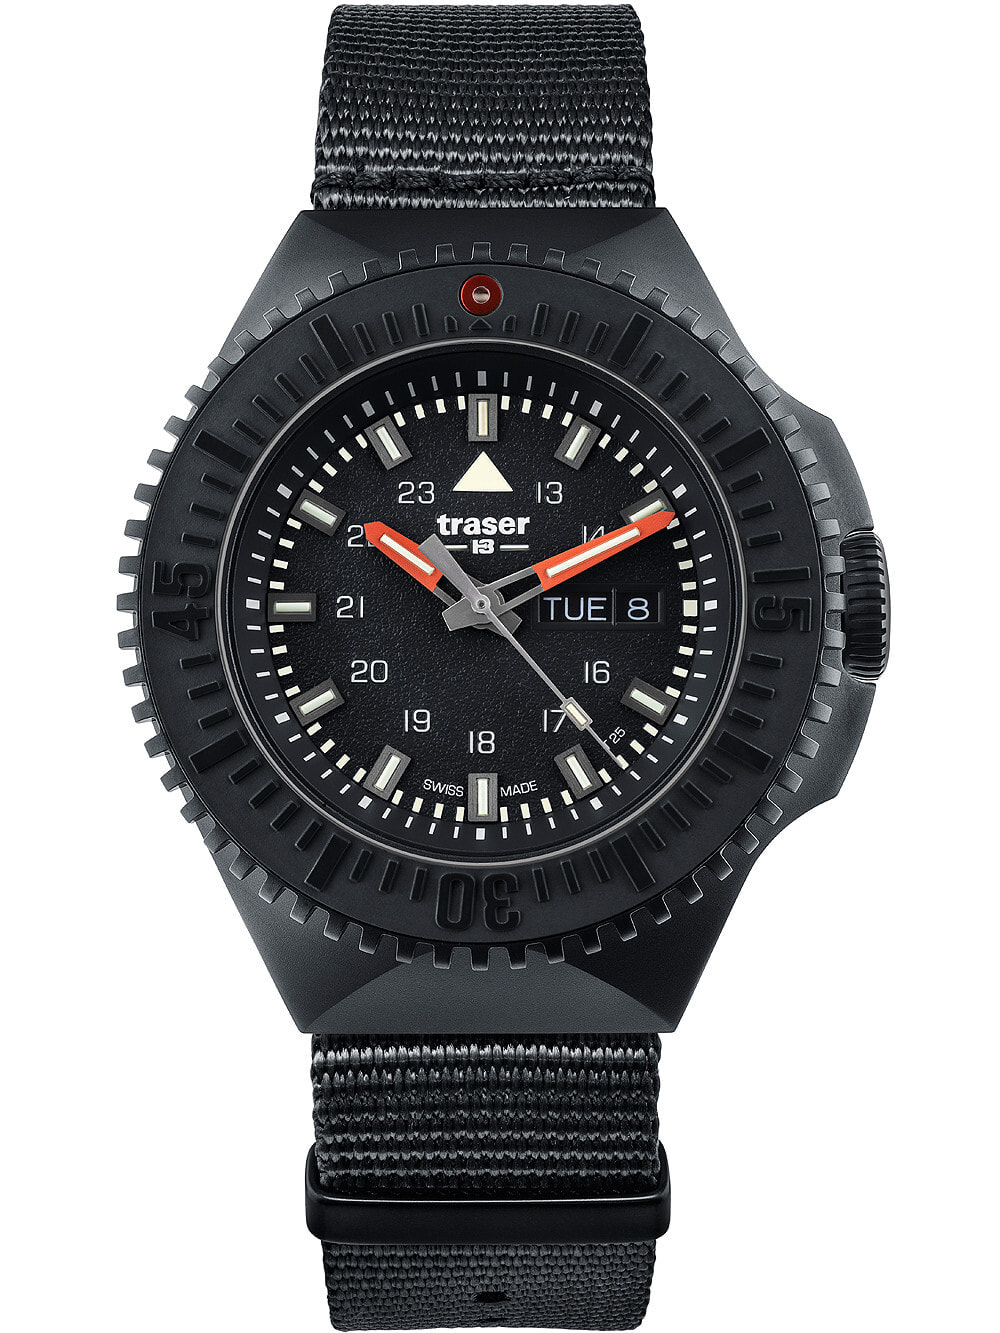 Мужские наручные часы с черным текстильным ремешком Traser H3 109854 P69 Black-Stealth Black 46mm 20ATM